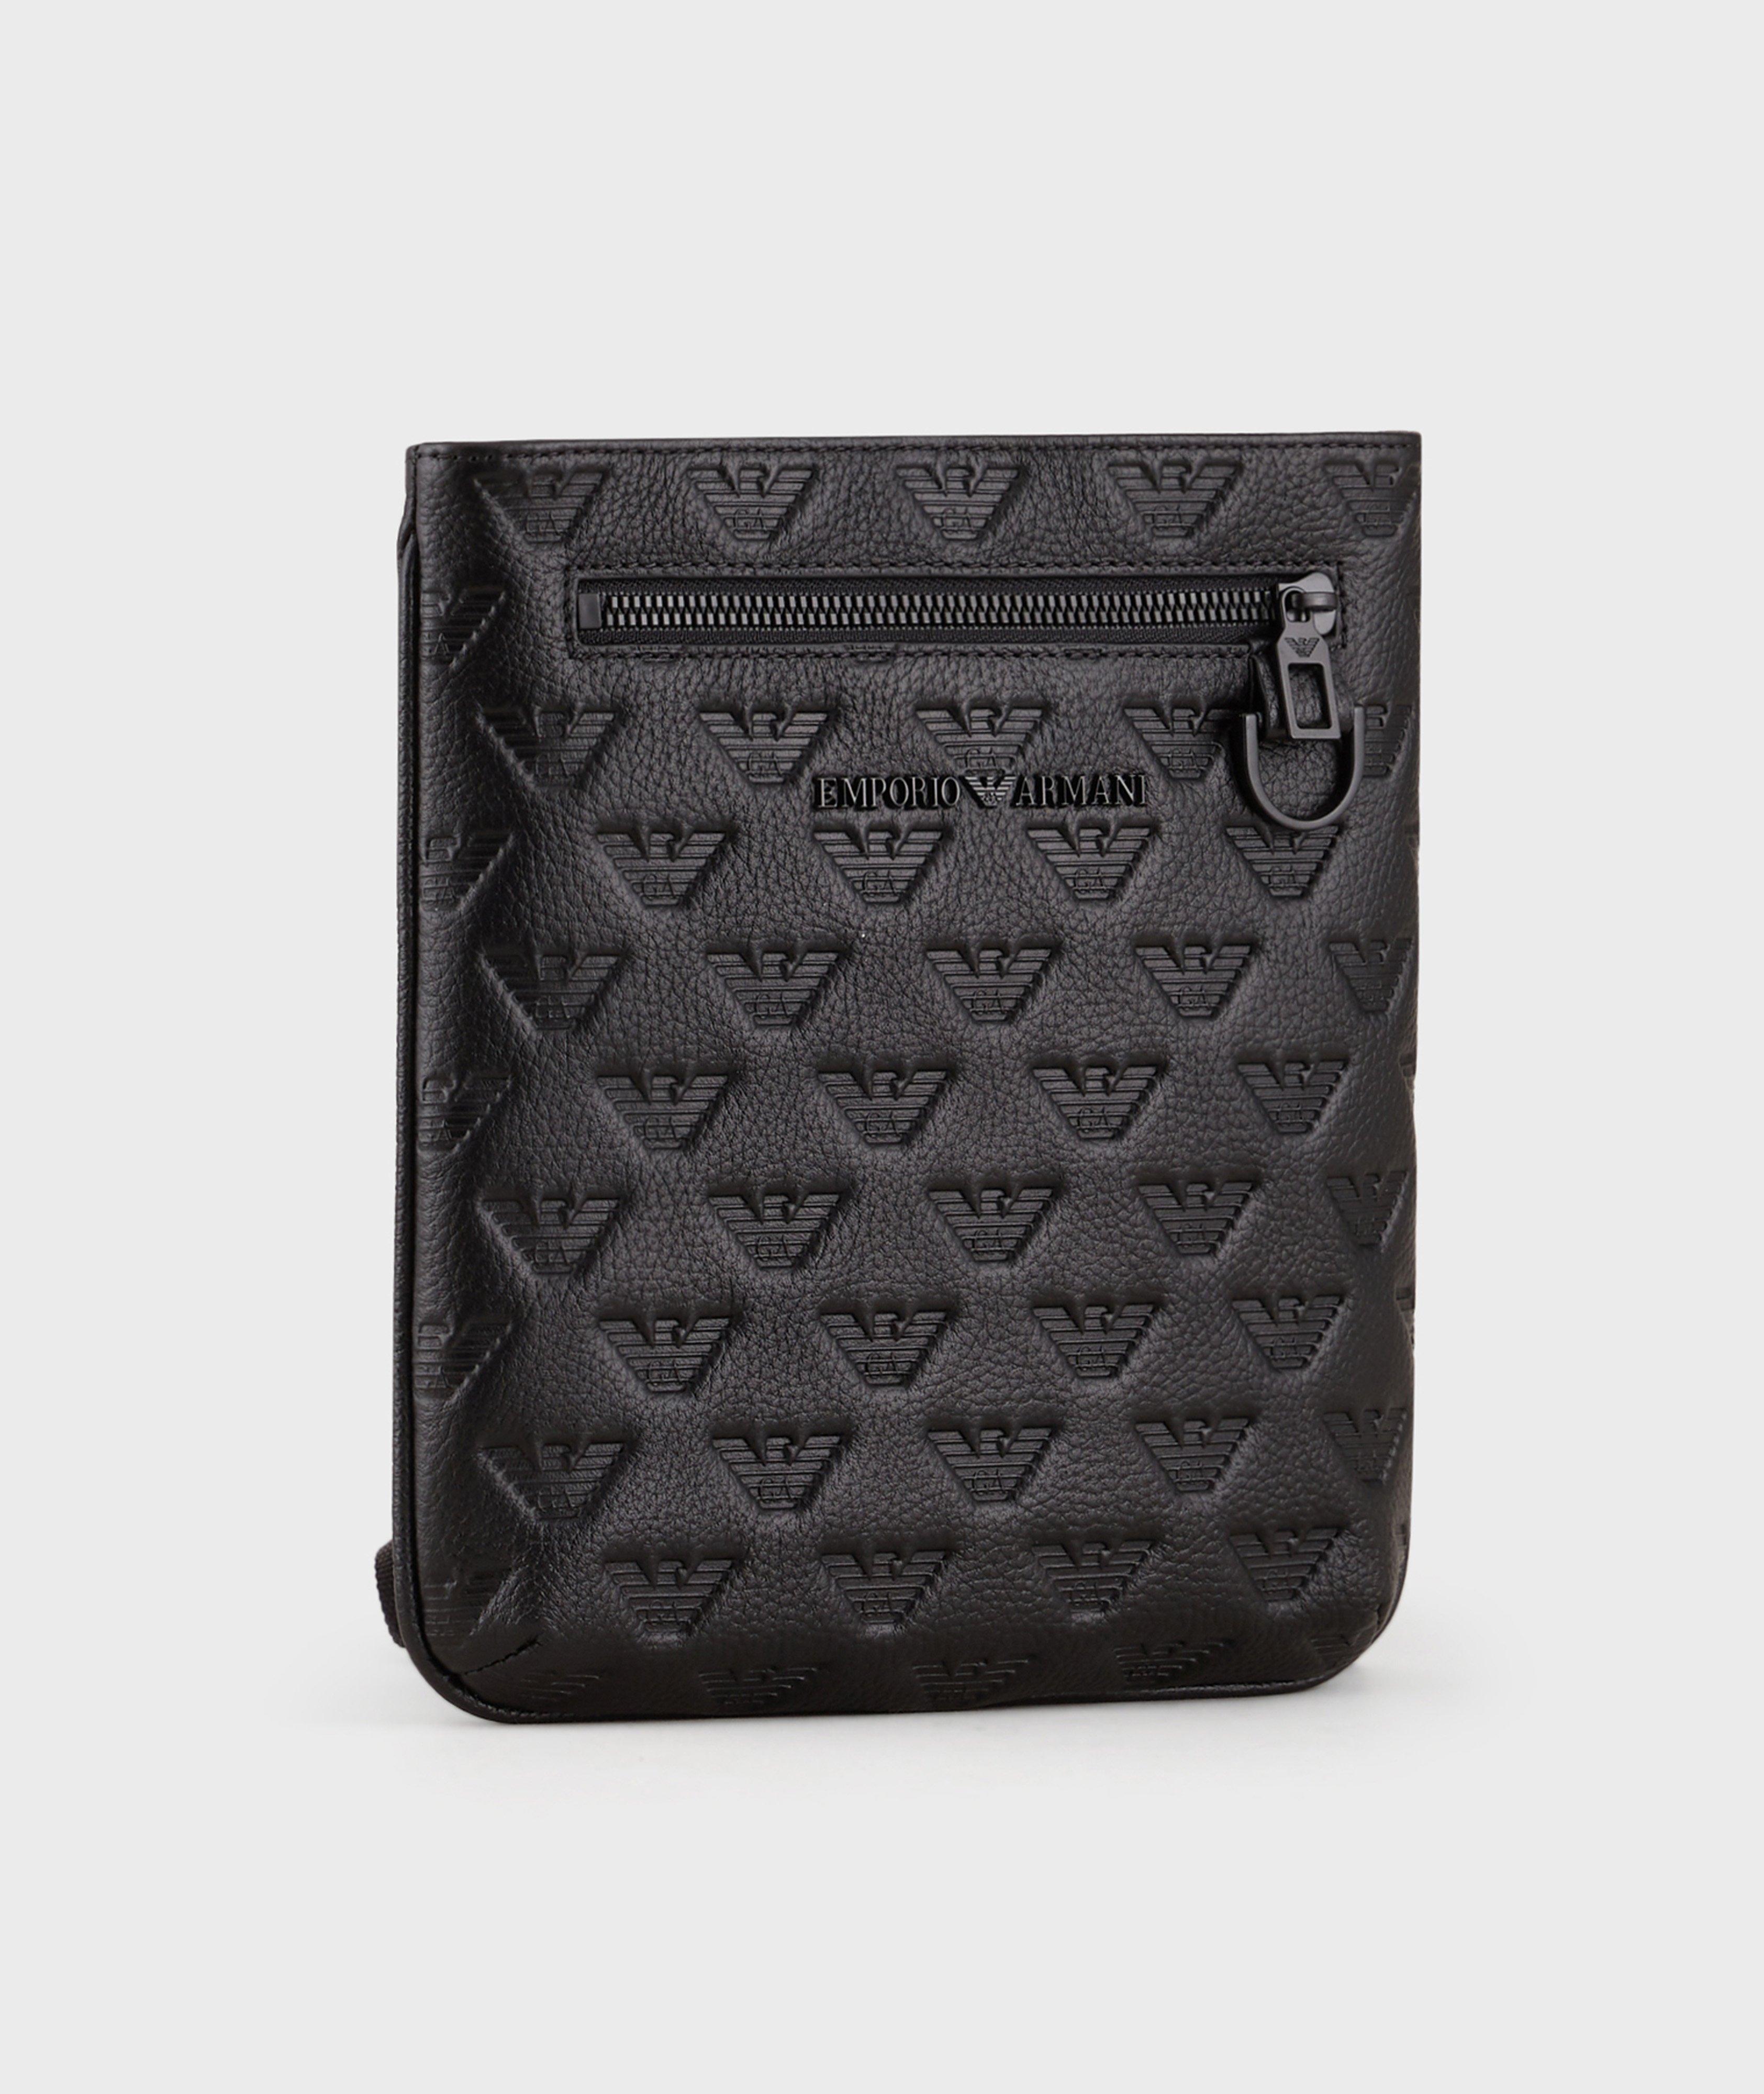 Emporio Armani Leather Logoed Crossbody Messenger Bag | Bags & Cases ...